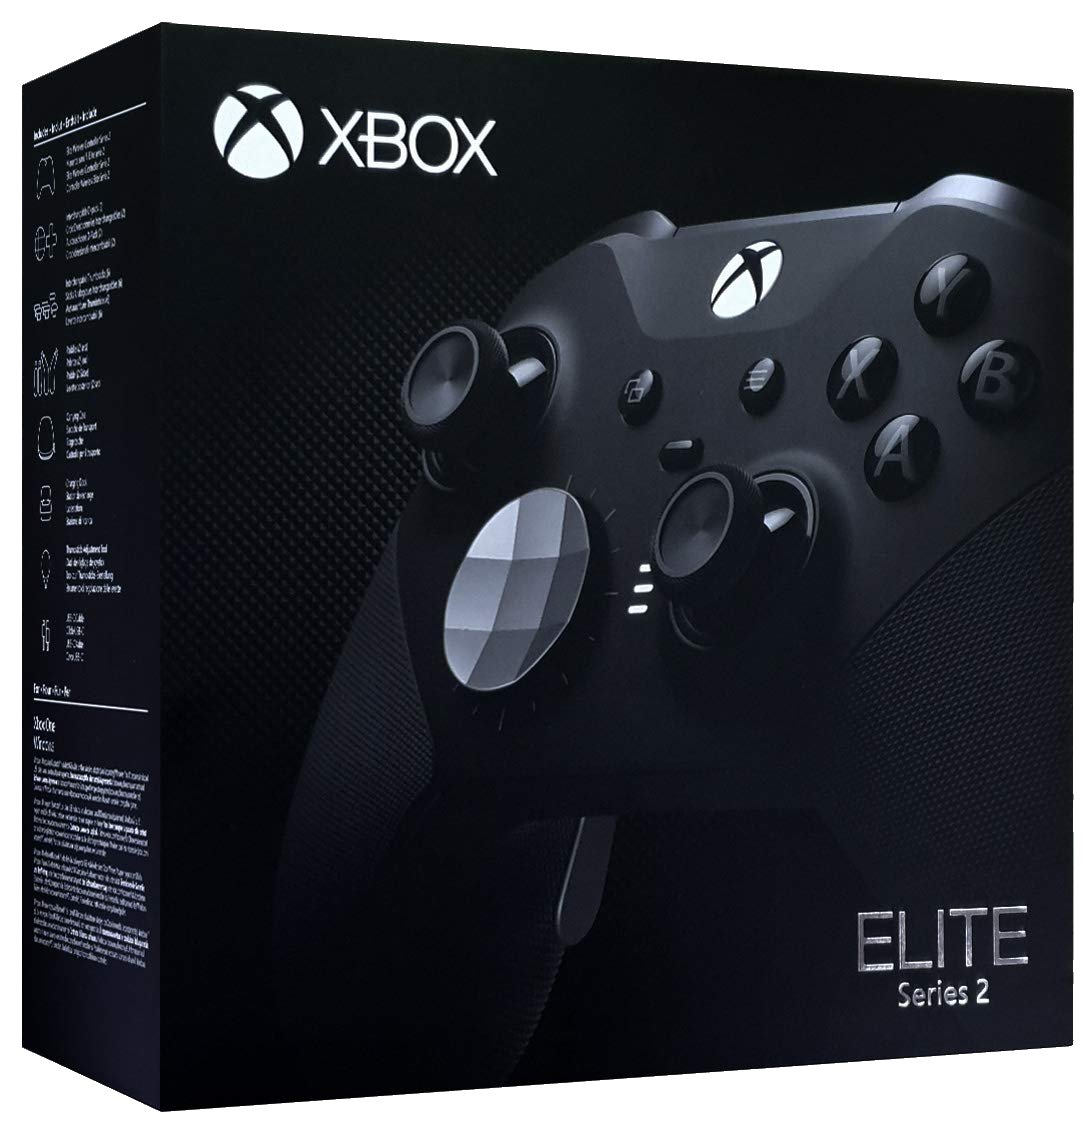 Xbox Elite Wireless Controller Series 2 BLACK - Level UpXBOXXbox controller889842196368